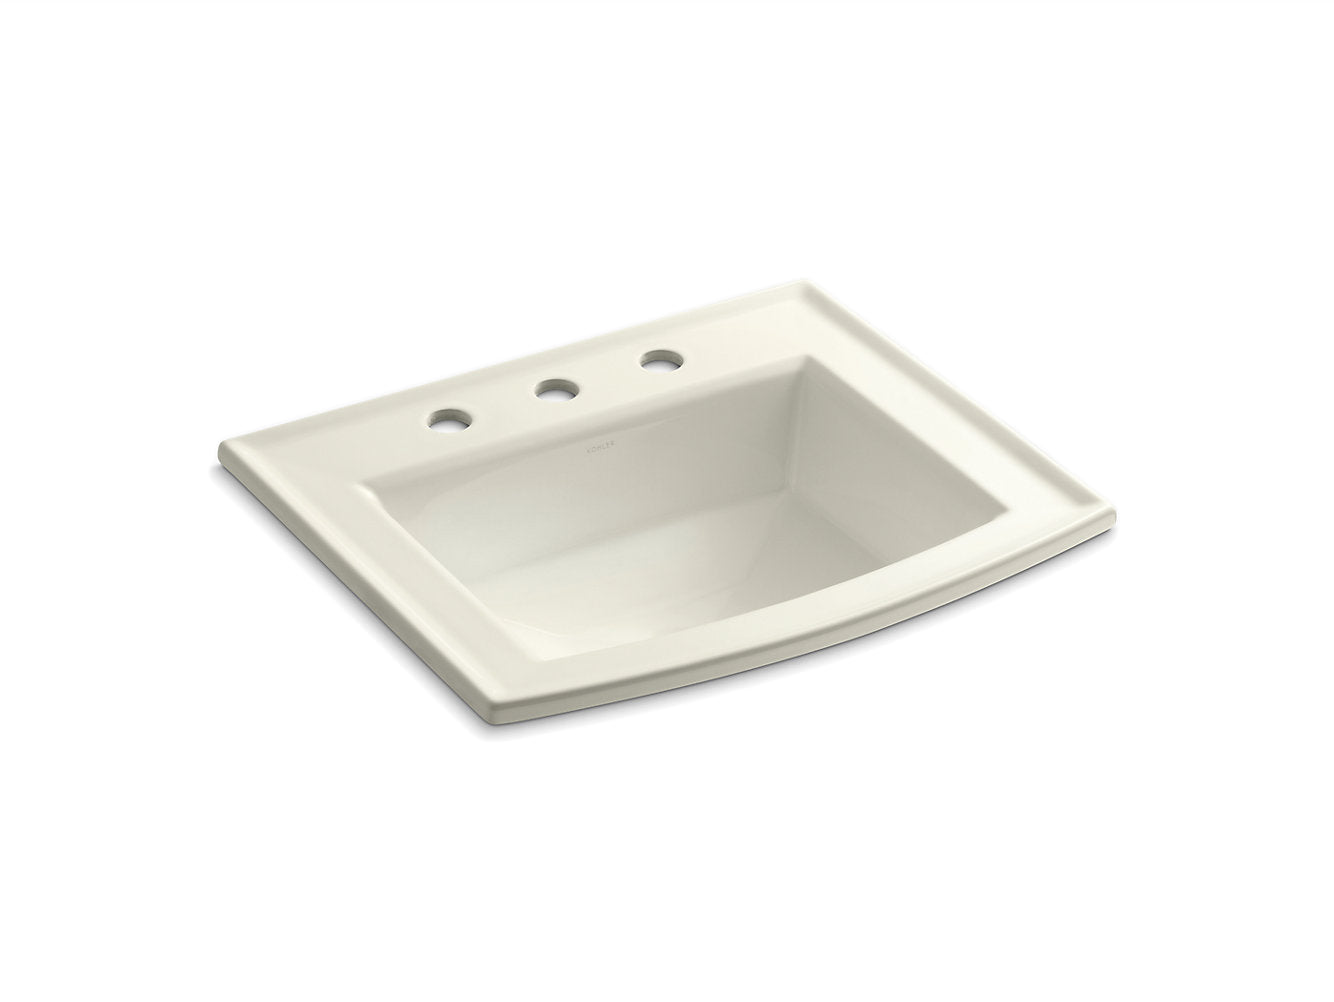 Kohler Archer 22 ⅝" x 19 ⁷⁄₁₆" Drop-in Bathroom Sink With 8" Widespread Faucet Holes - Biscuit